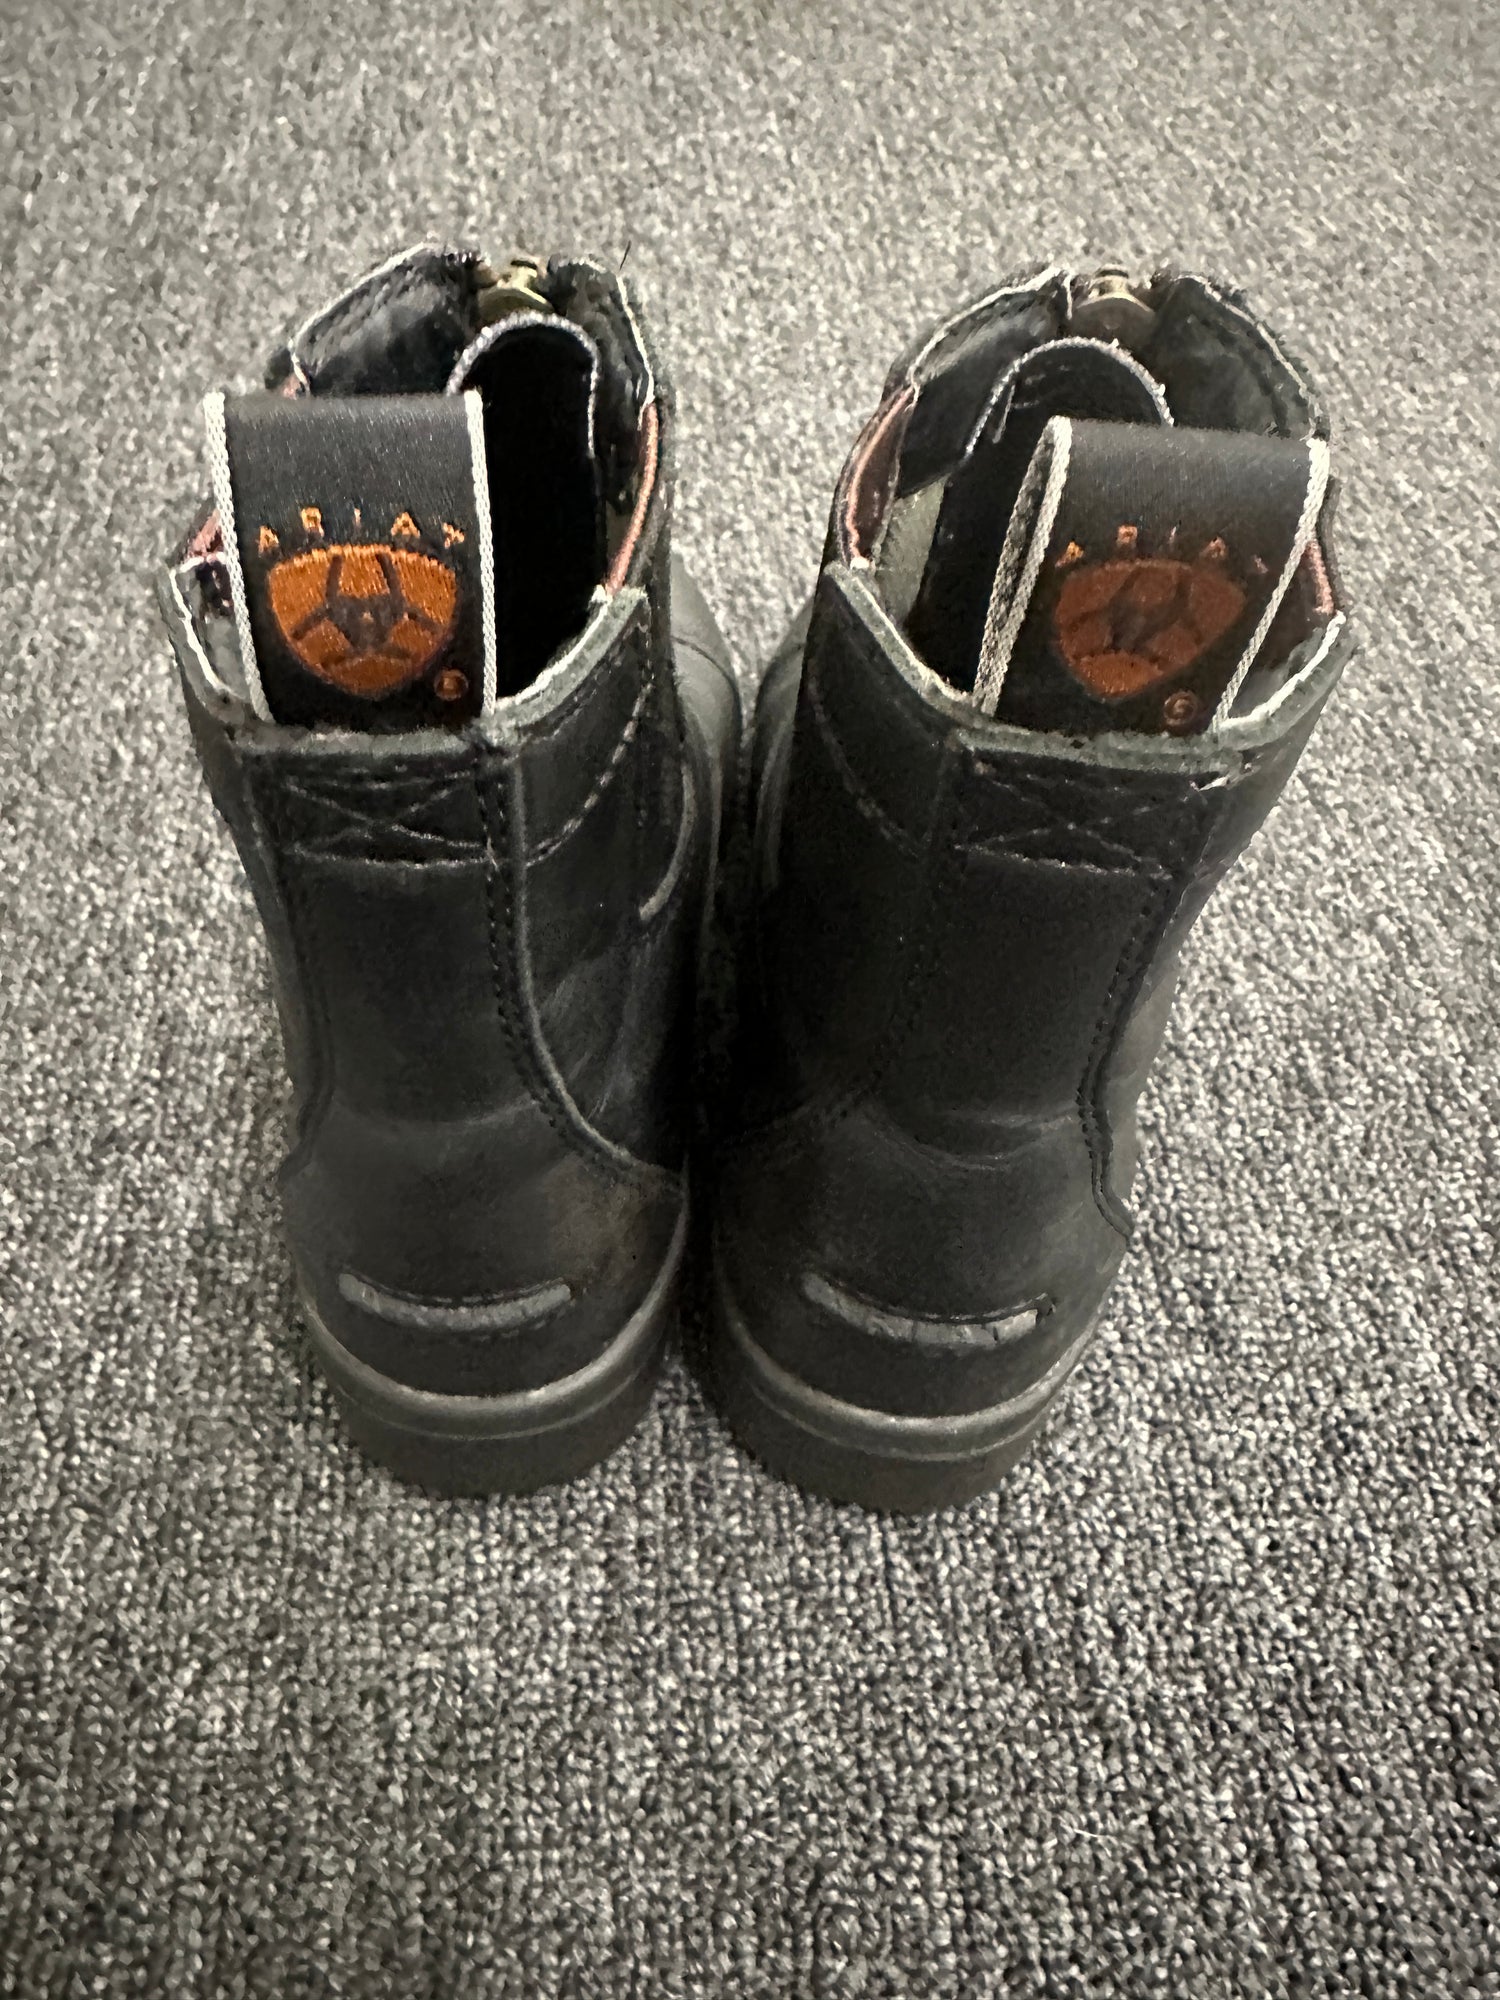 Ariat Paddock Boots "Children's" Size 1C